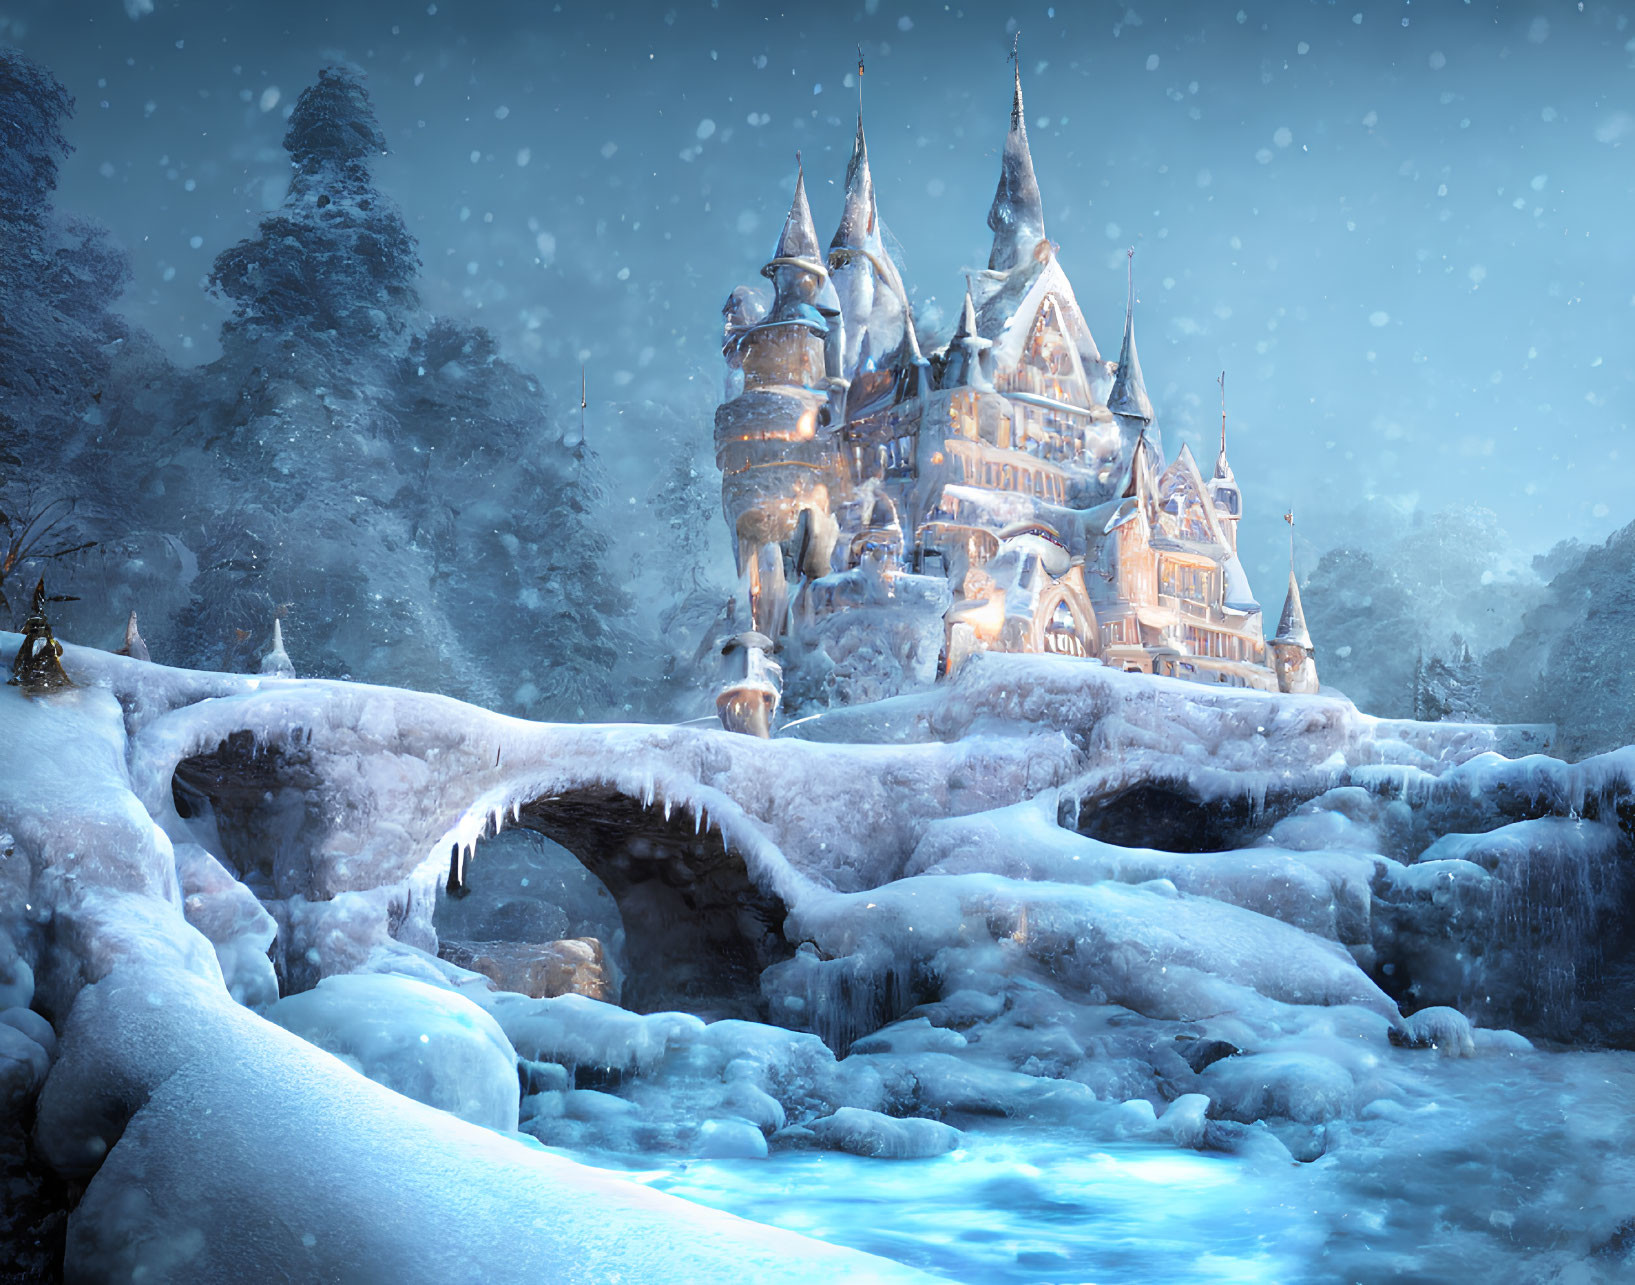 Snow-covered castle, stone bridge, falling snowflakes - Magical winter scene